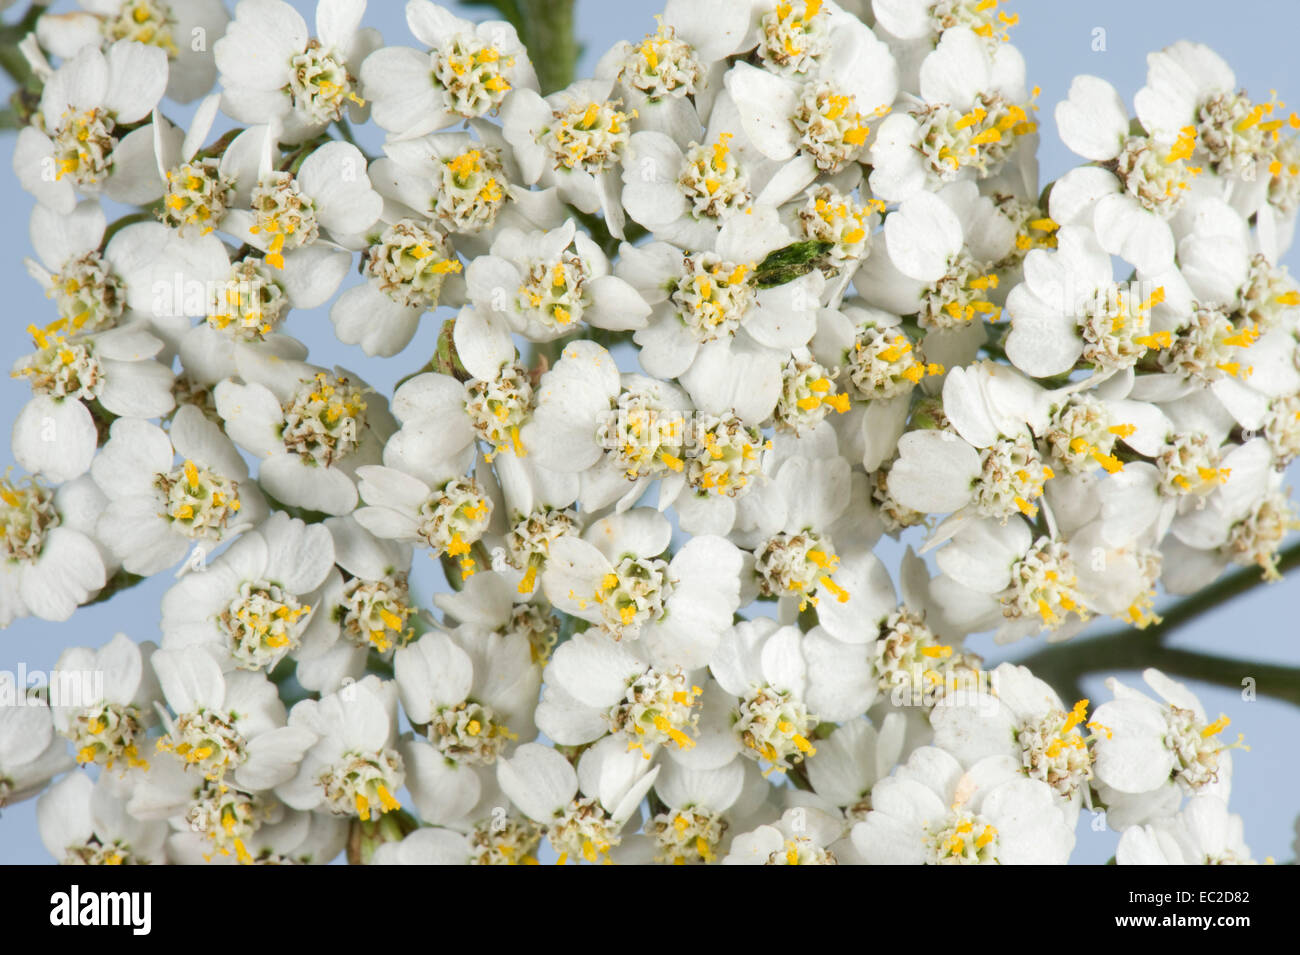 Flowers of common yarrow, Achillea millefolium, white flowering grassland weed with Compositae flowers Stock Photo